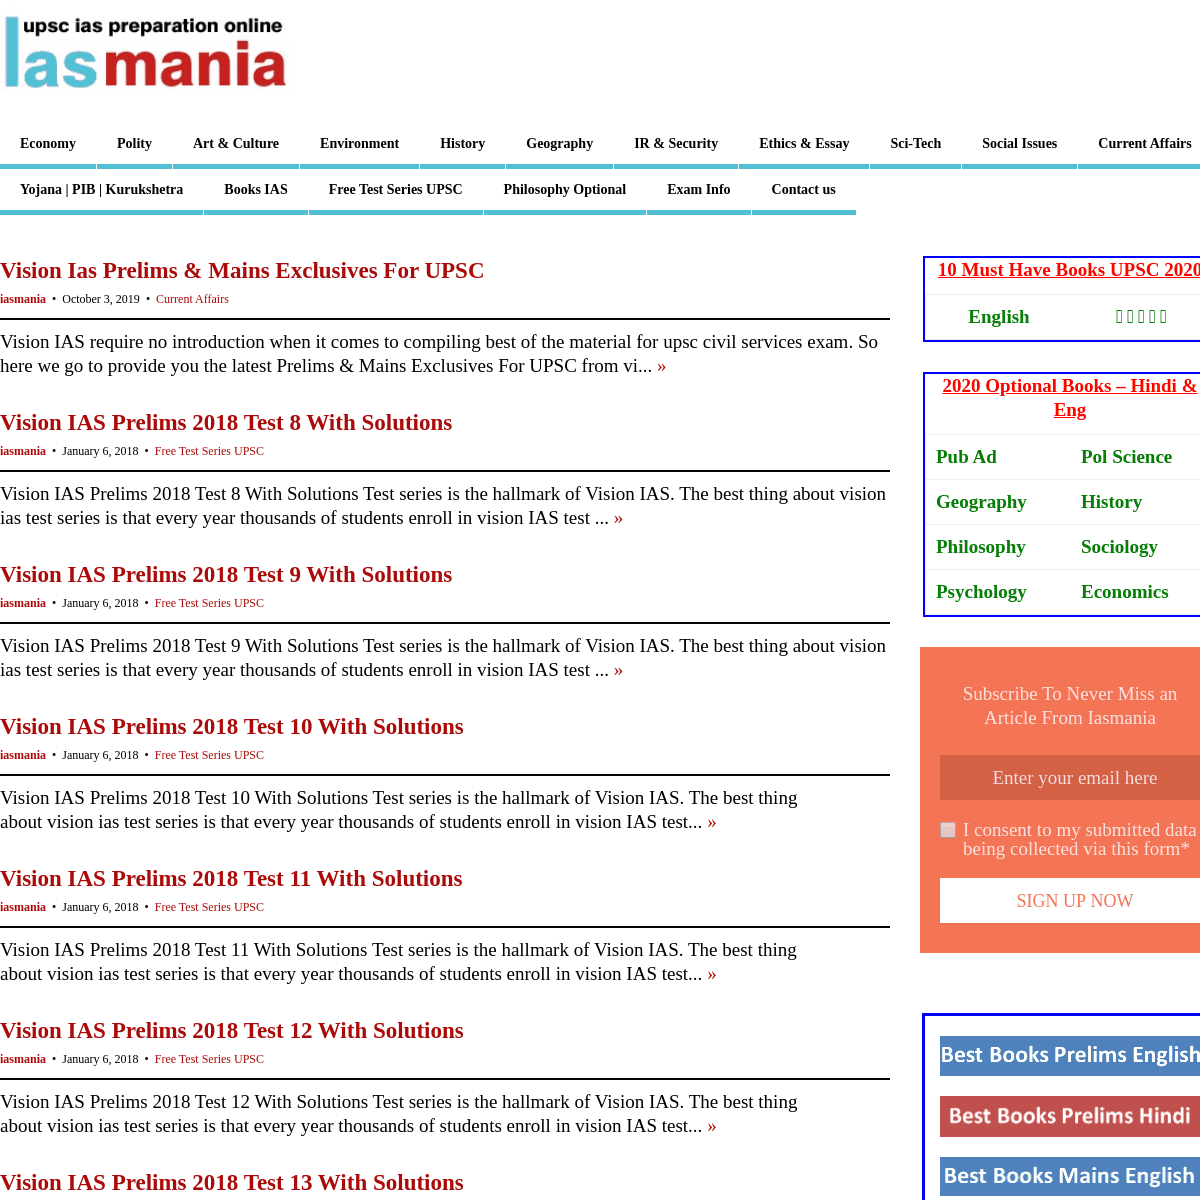 A complete backup of iasmania.com